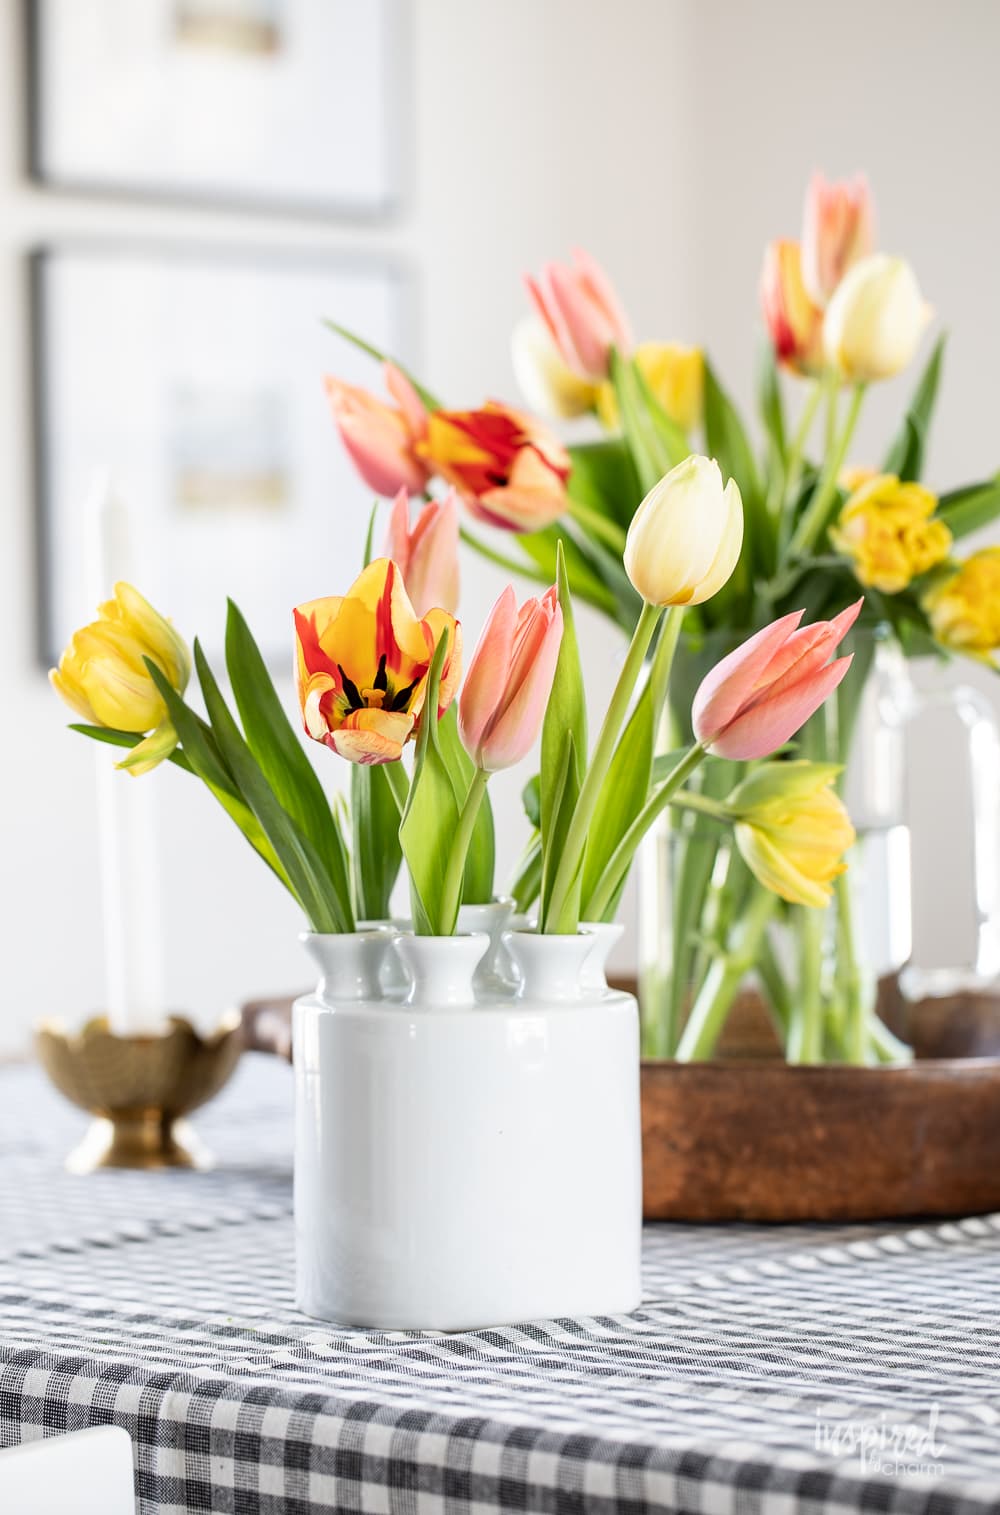 Tulipiere - Tulip Vase / Flower Vase for Flower Arranging